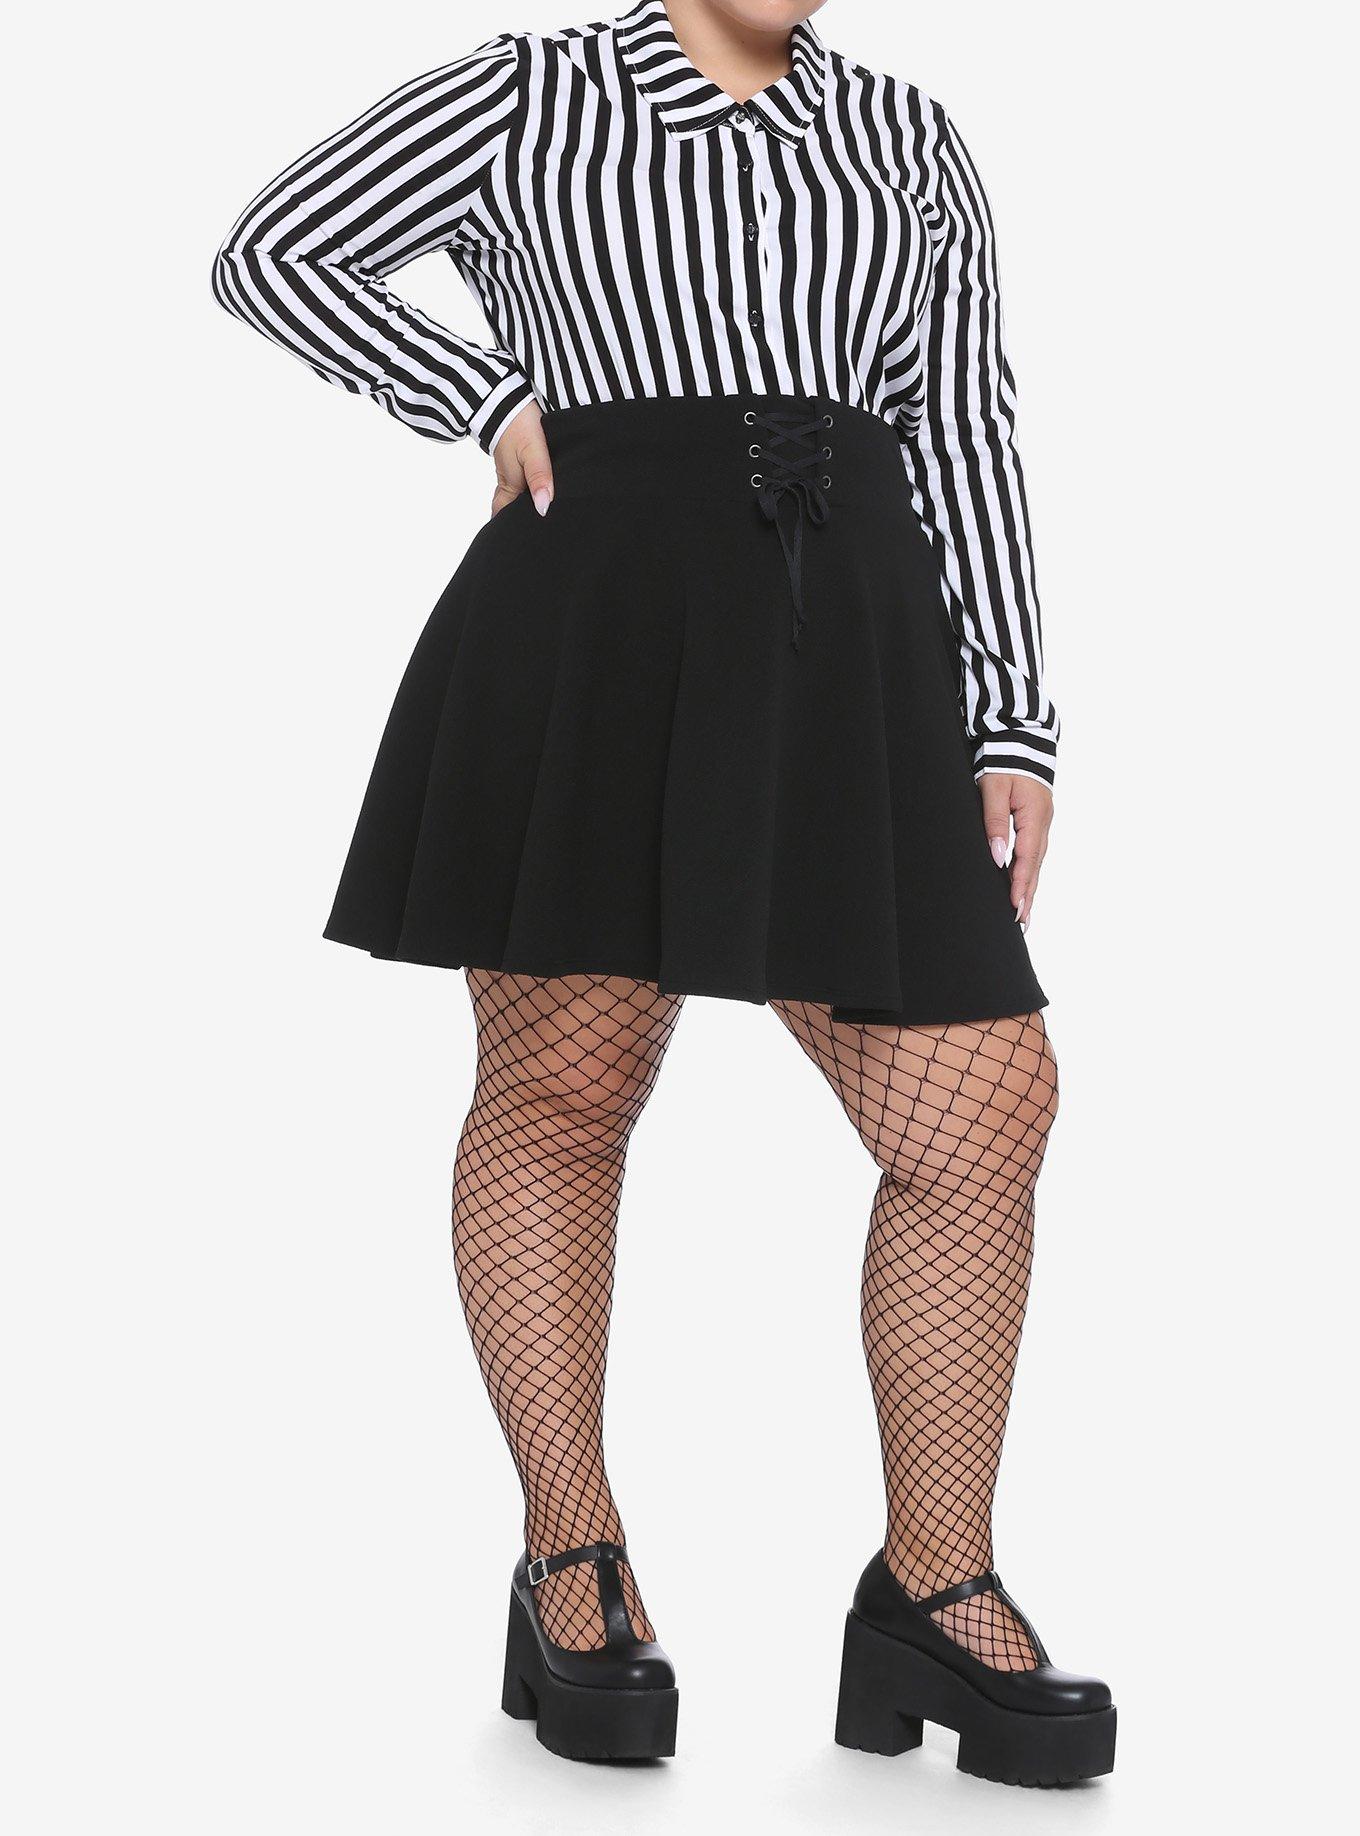 Lace-Up Skater Skirt Plus Size, BLACK, alternate